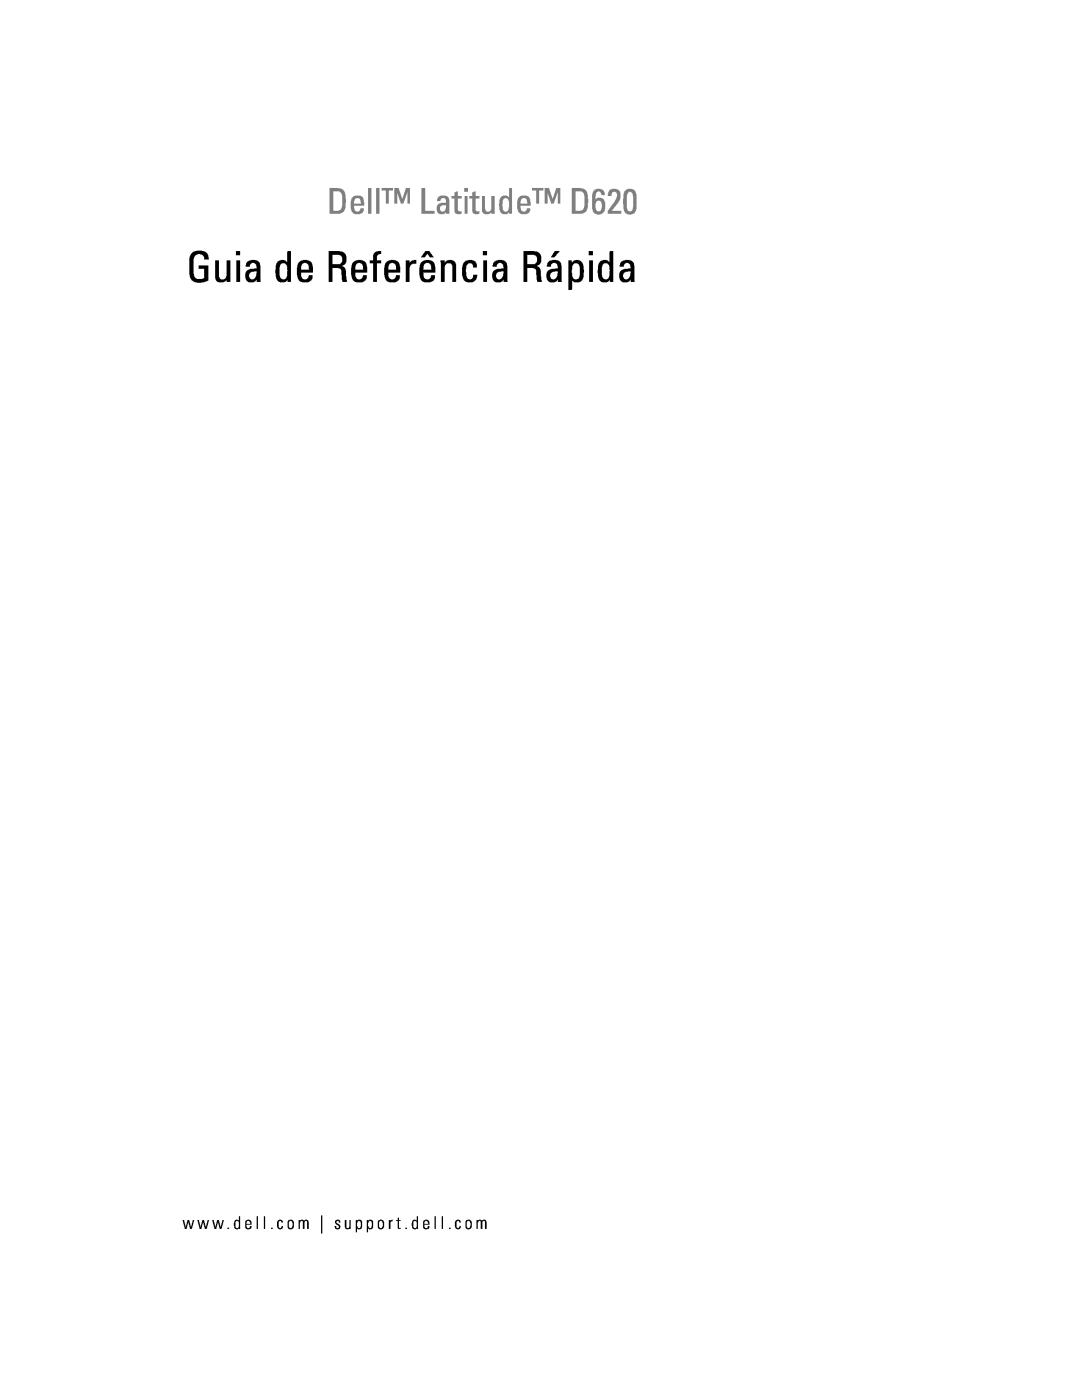 Dell manual Guia de Referência Rápida, Dell Latitude D620 